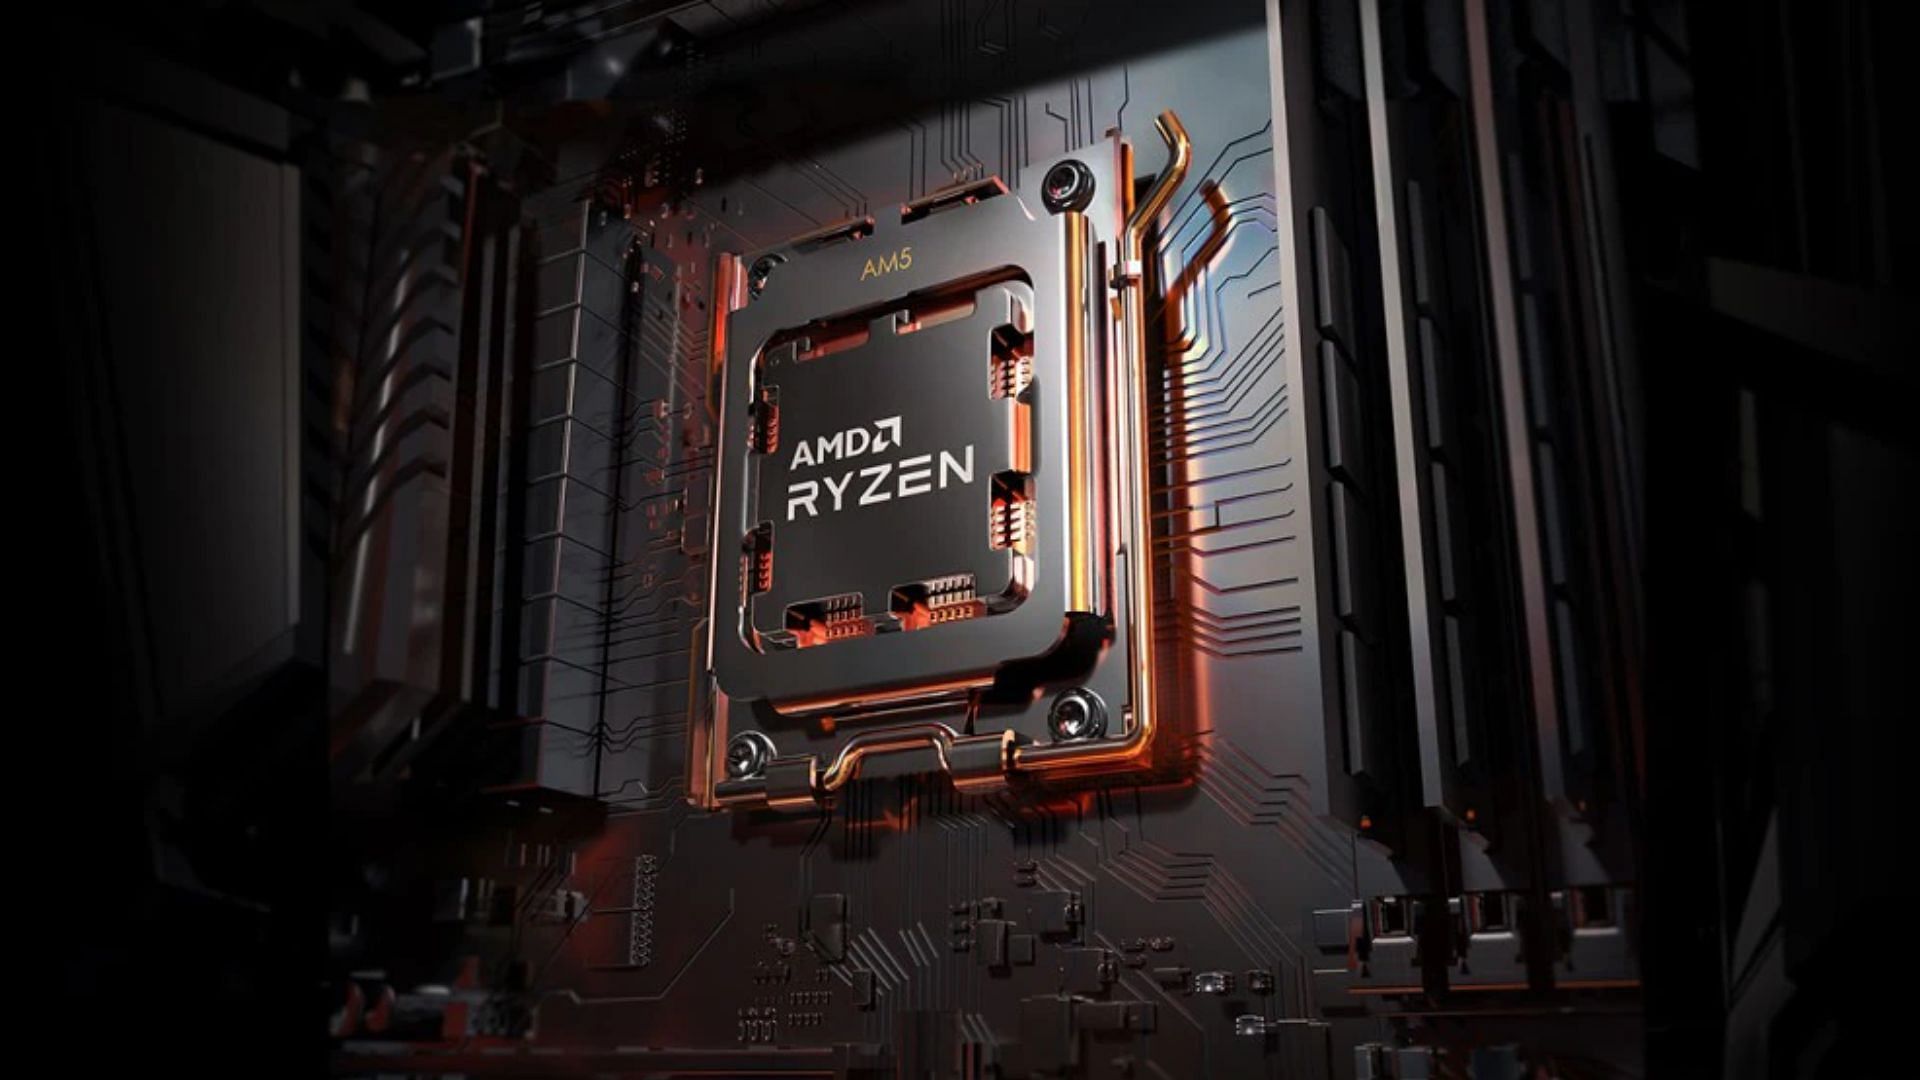 AMD Ryzen 7 7800X3D 4.2GHz 8C/16T AM5 CPU For ASUS ROG STRIX X670E-E GAMING  WIFI